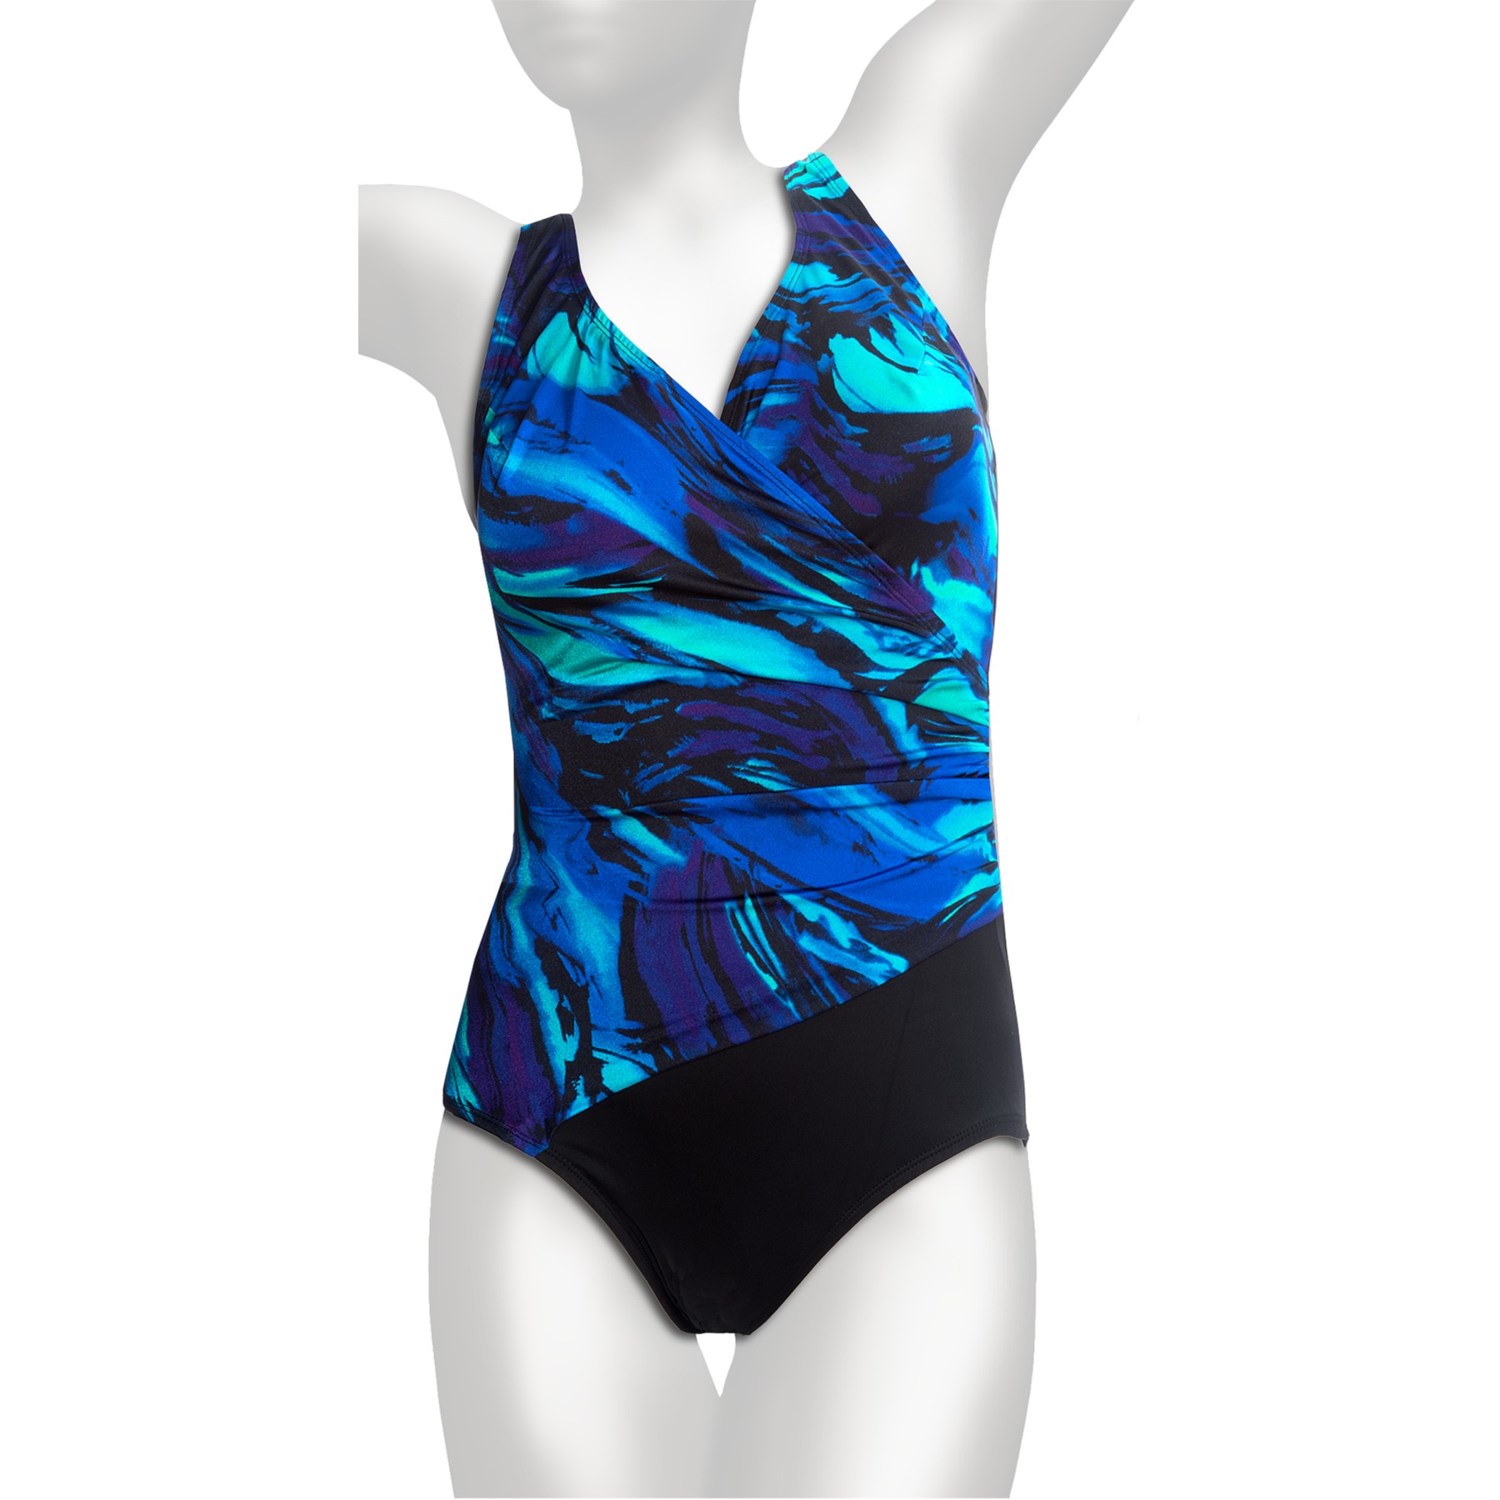 Longitude Modern Art Swimsuit (For Plus Size Women) 8019W - Save 44%